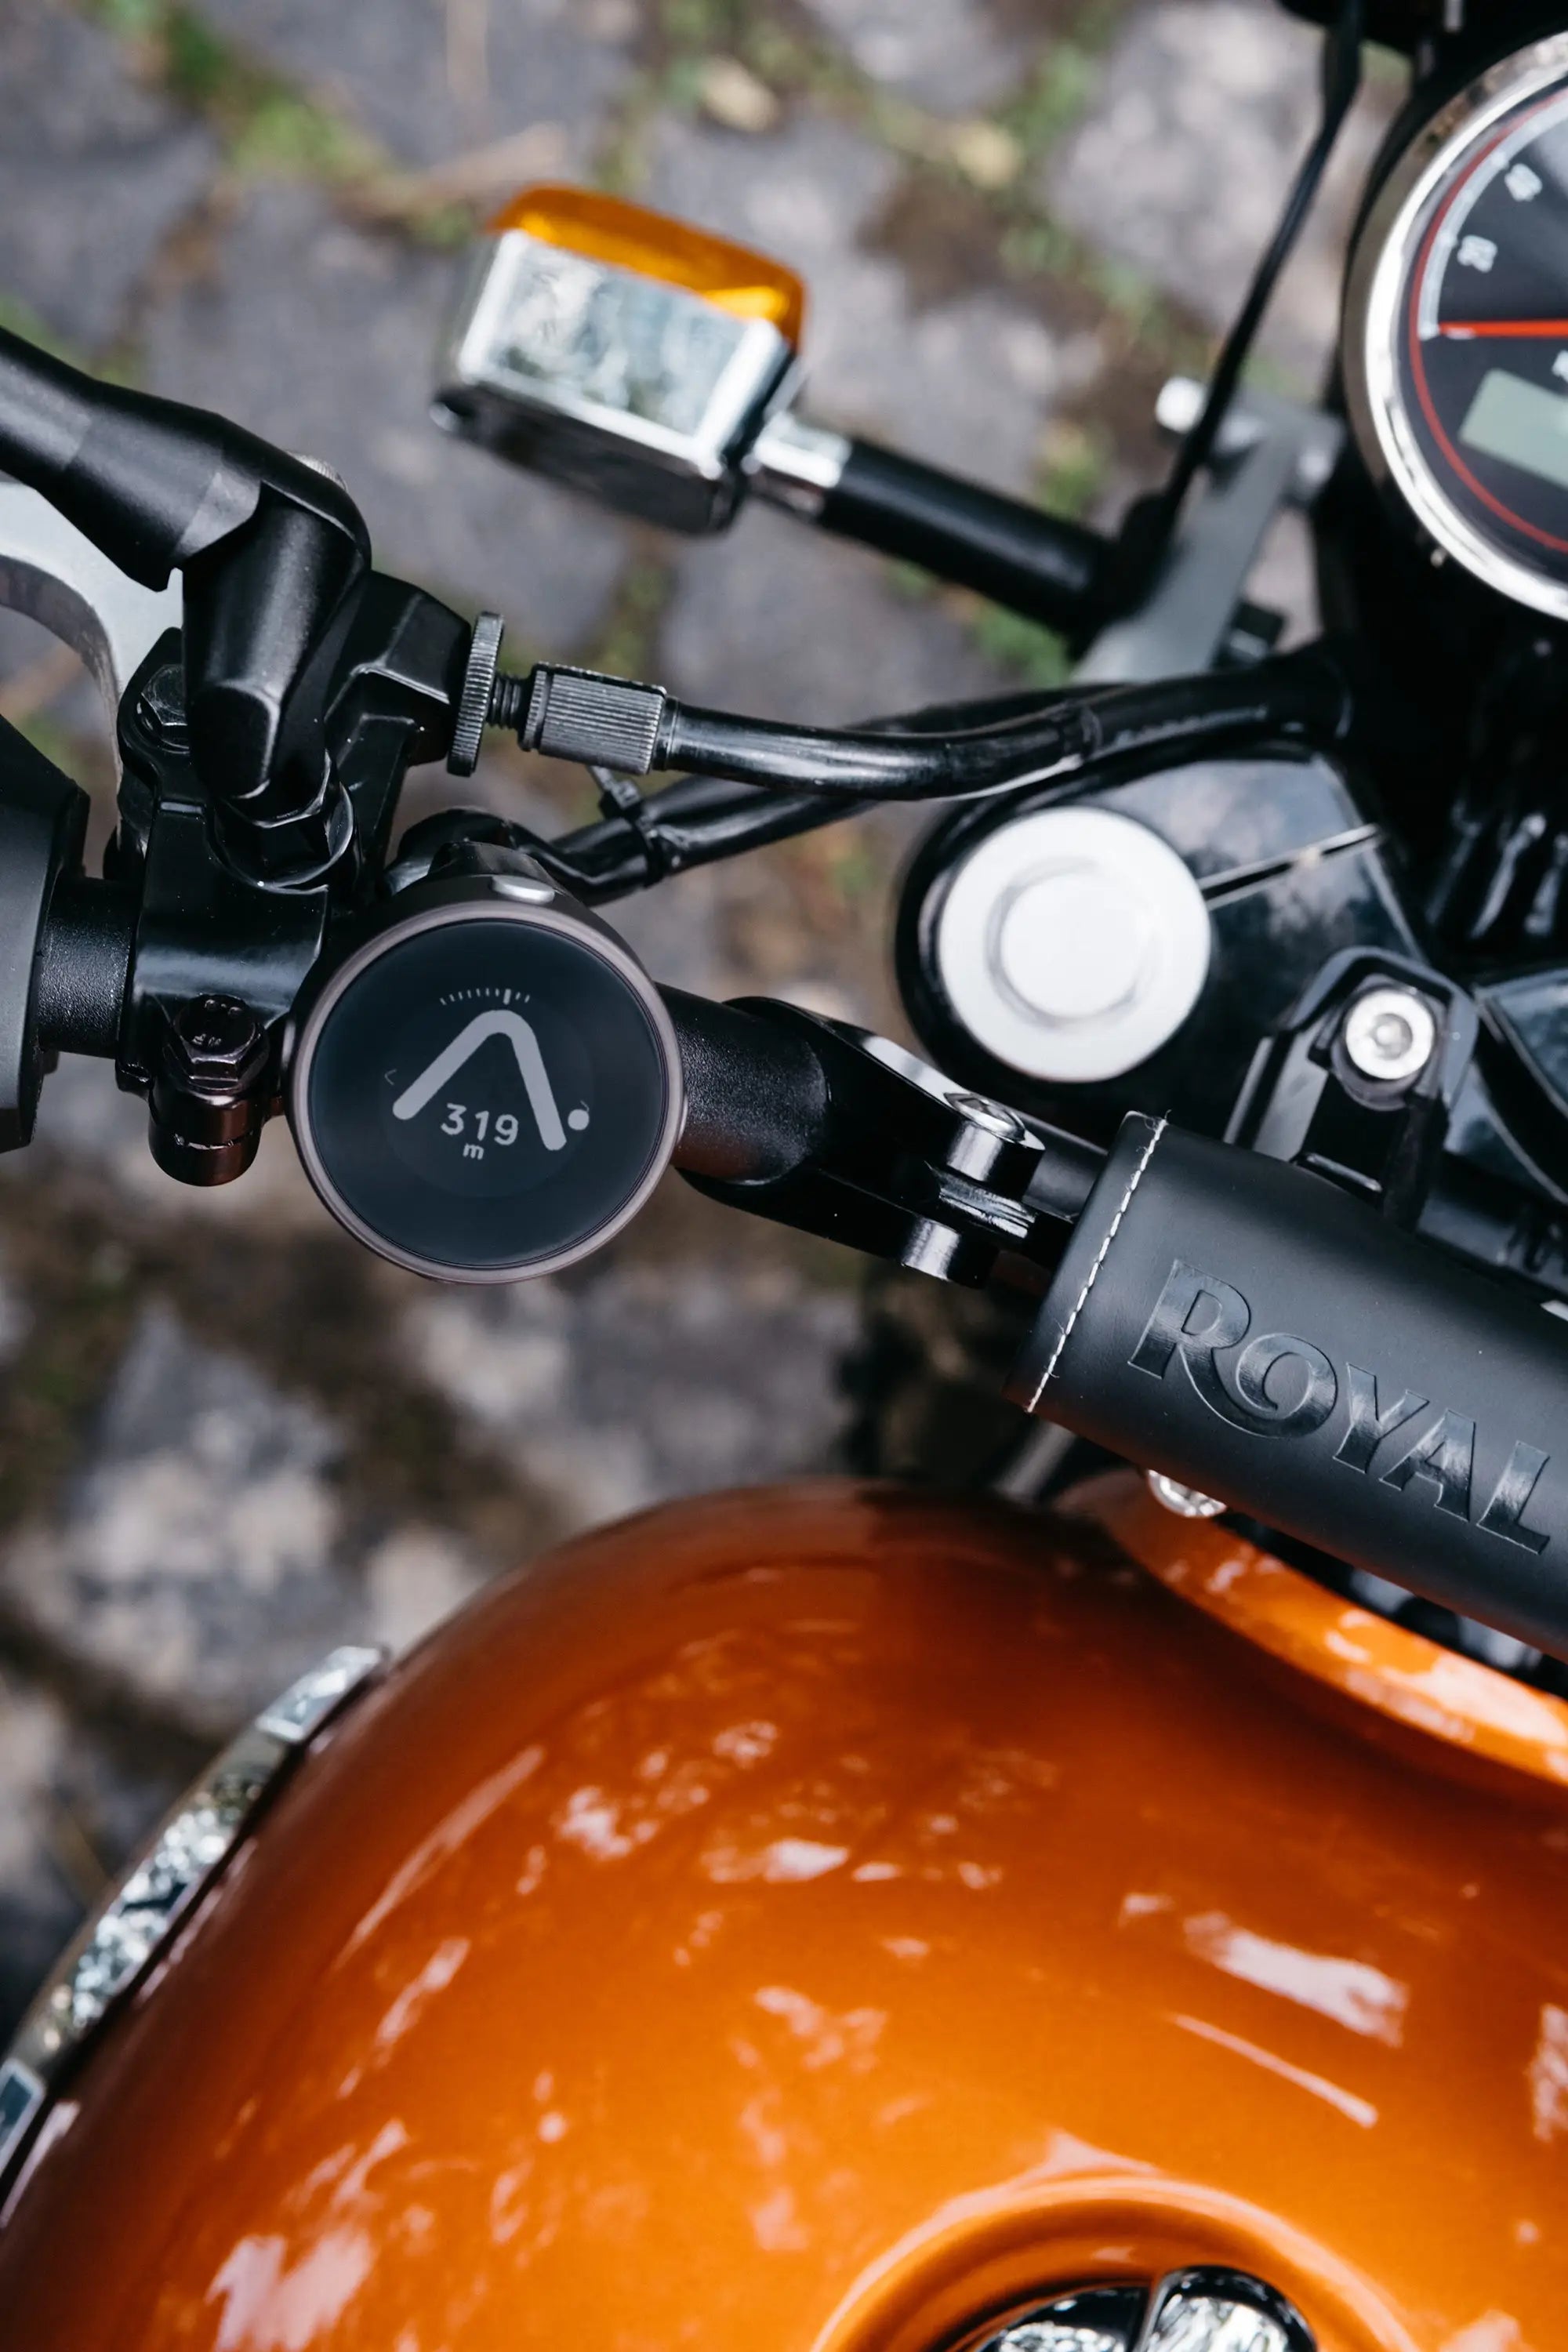 Load video: Watch: Moto navigation with Moto Bob